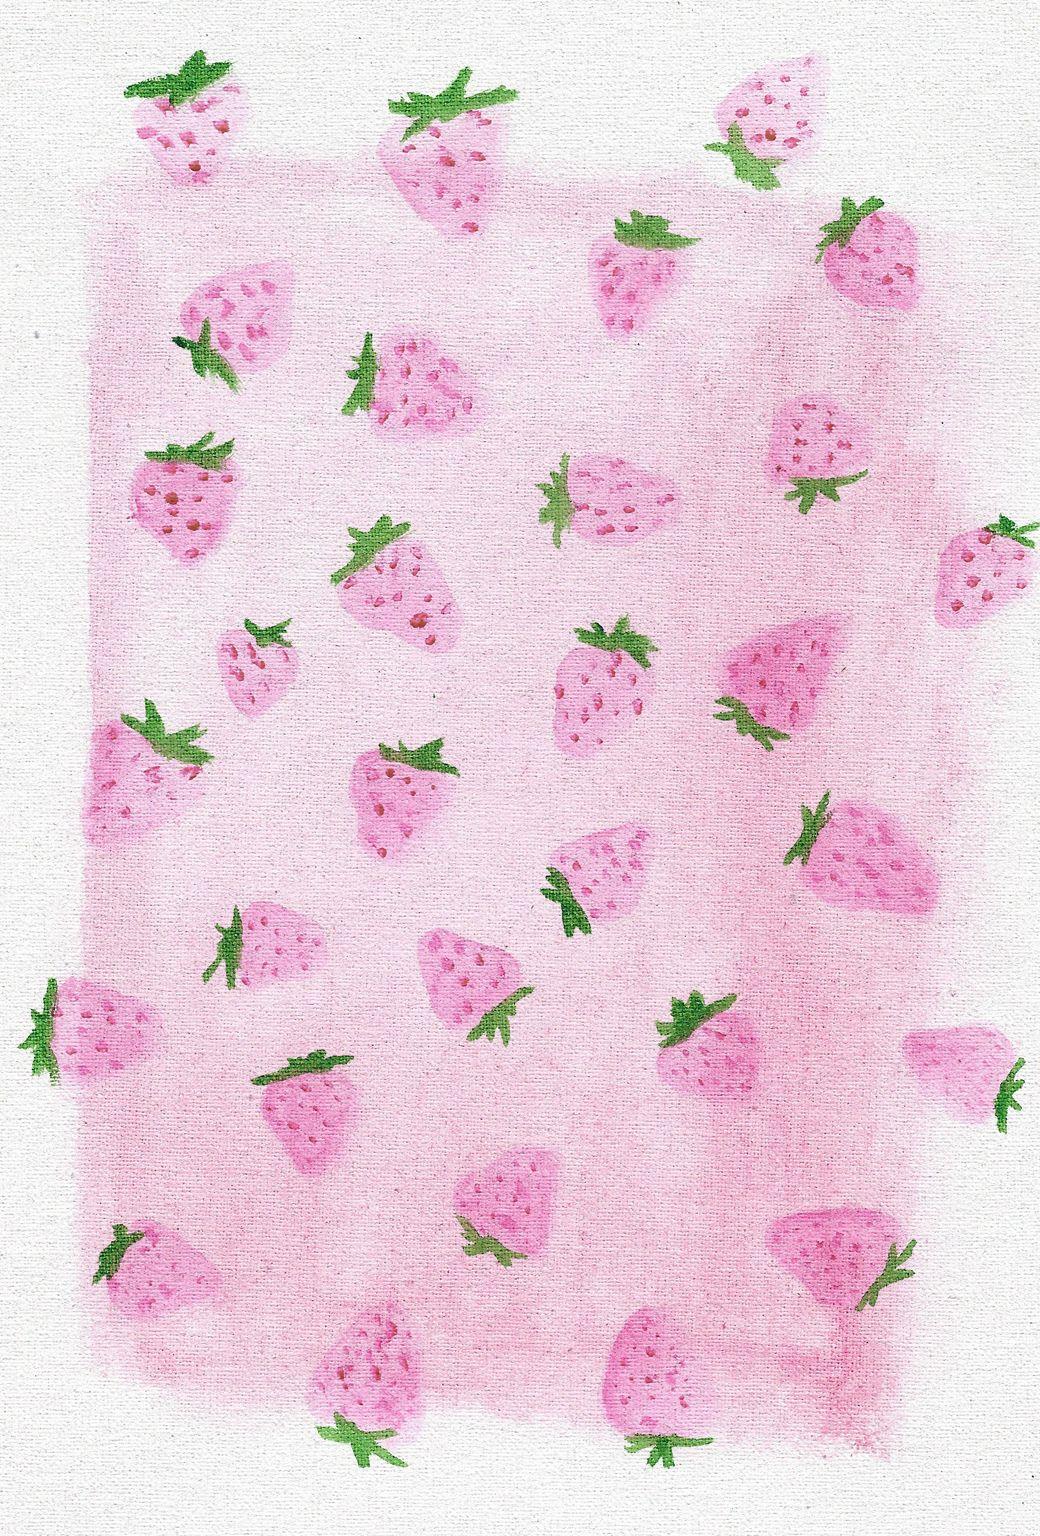 Strawberries Pink Watercolor iPhone Wallpaper. iPhone